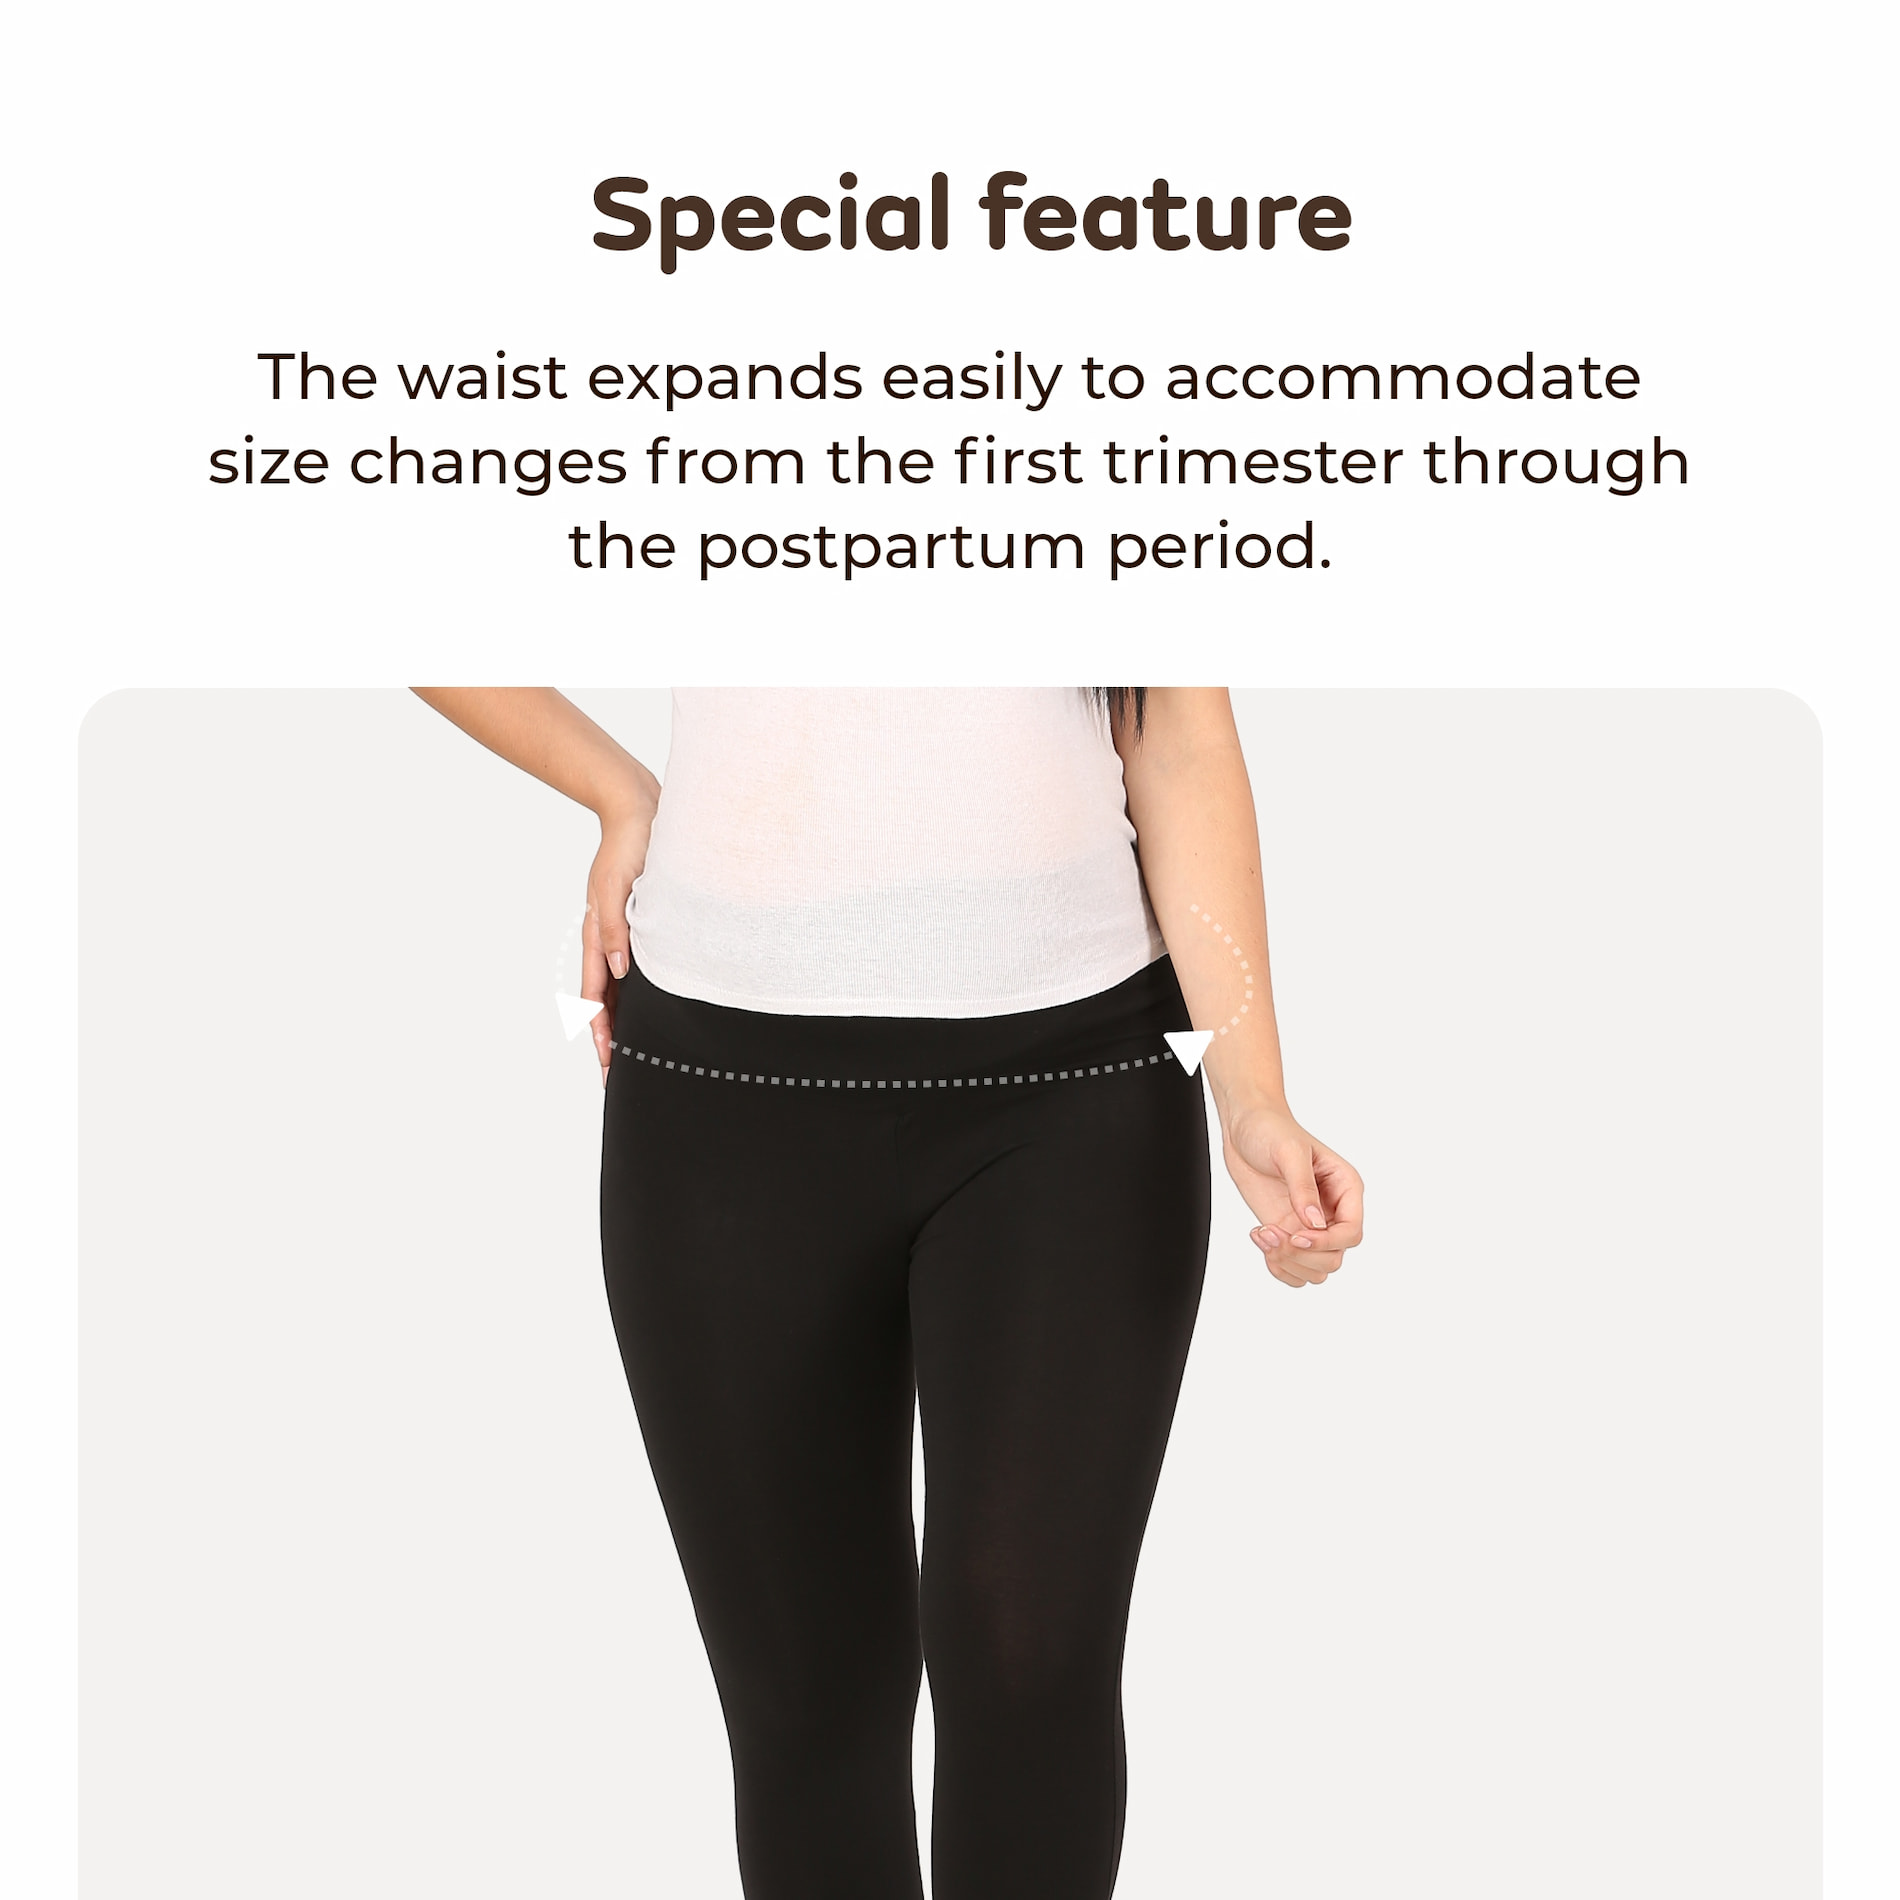 Mylo Stretchable Pregnancy & Post Delivery Leggings - Black (XL)